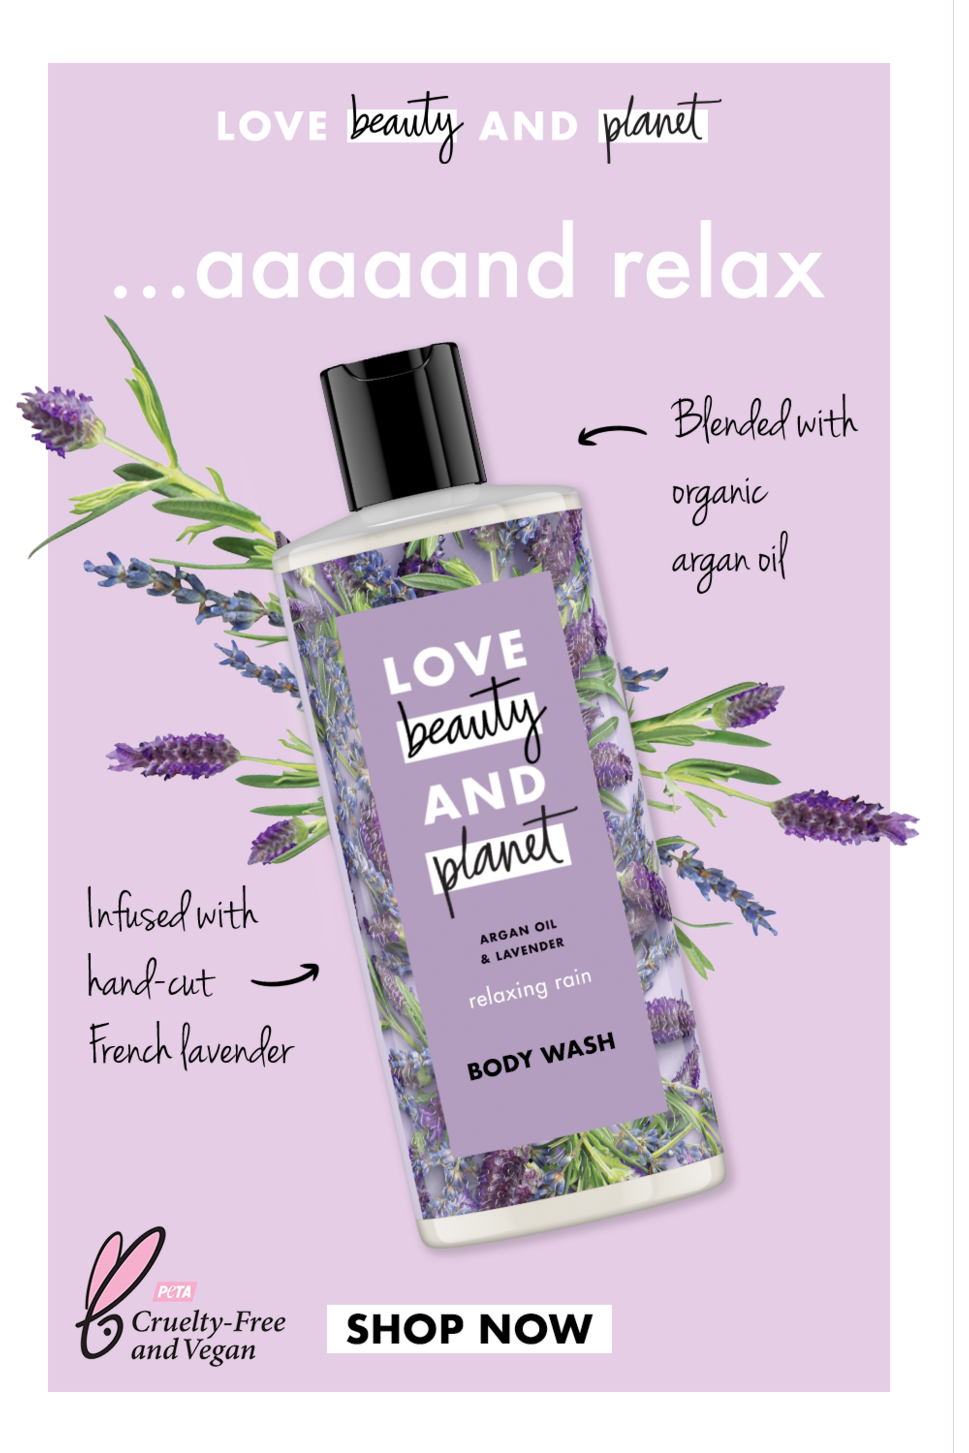 Buy Love Beauty And Planet Body Lotion Argan Oil & Lavender - 400ml in Pakistan